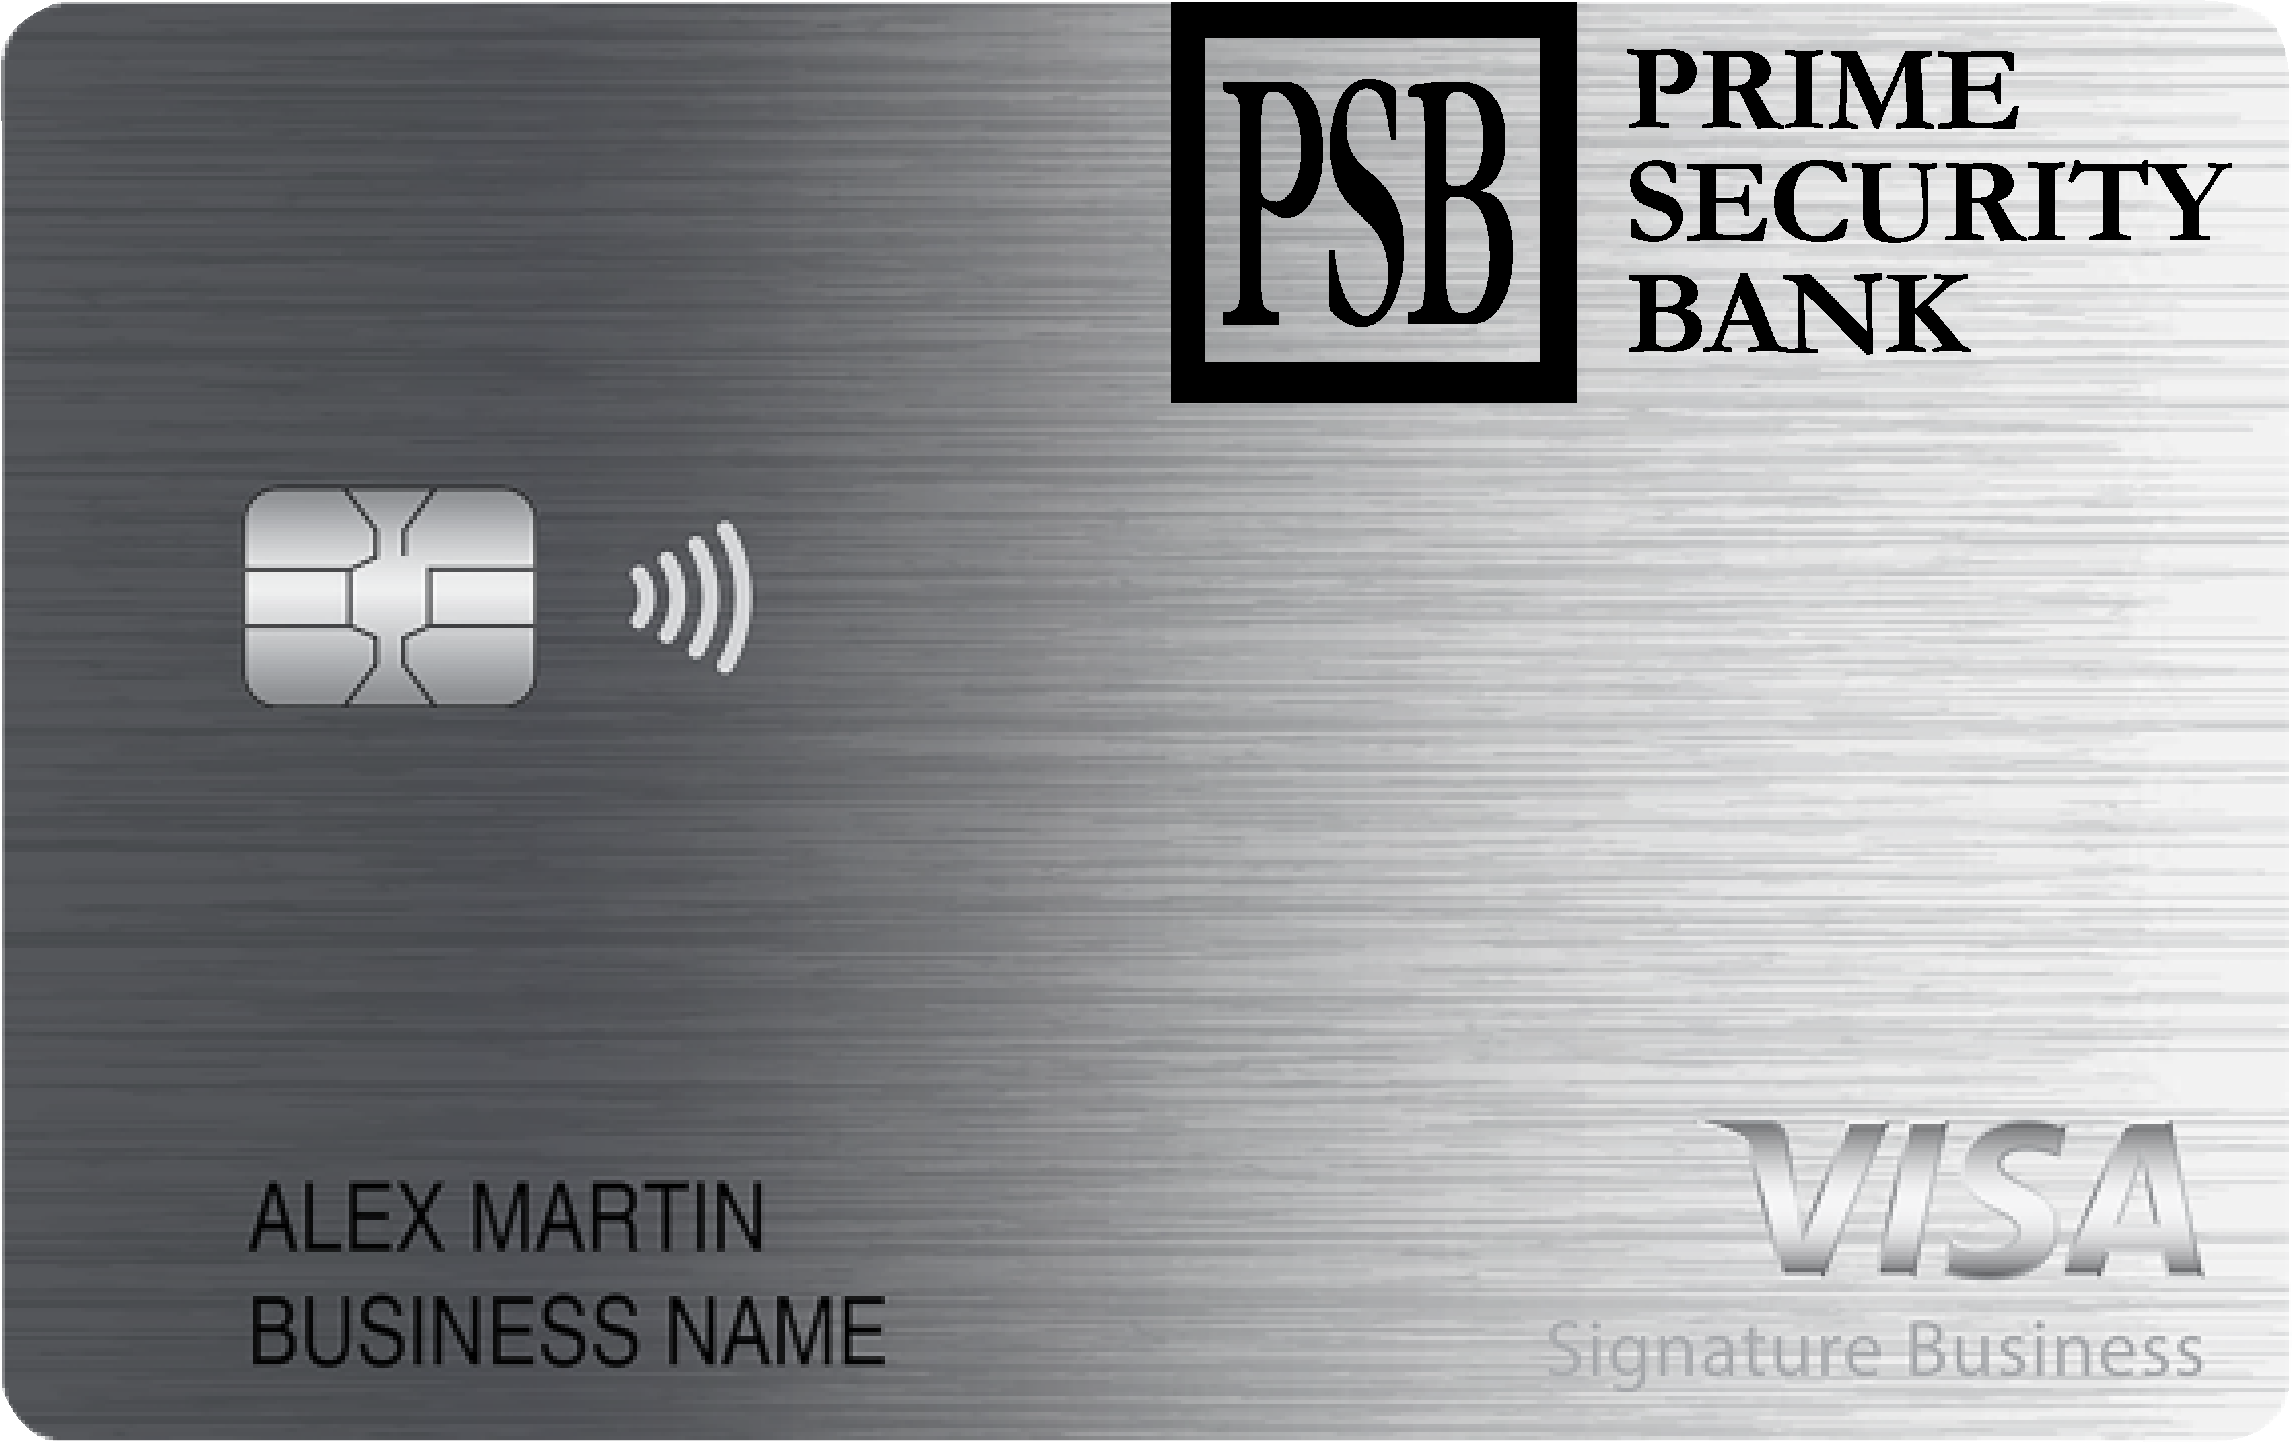 PRIME SECURITY BANK Smart Business Rewards Card